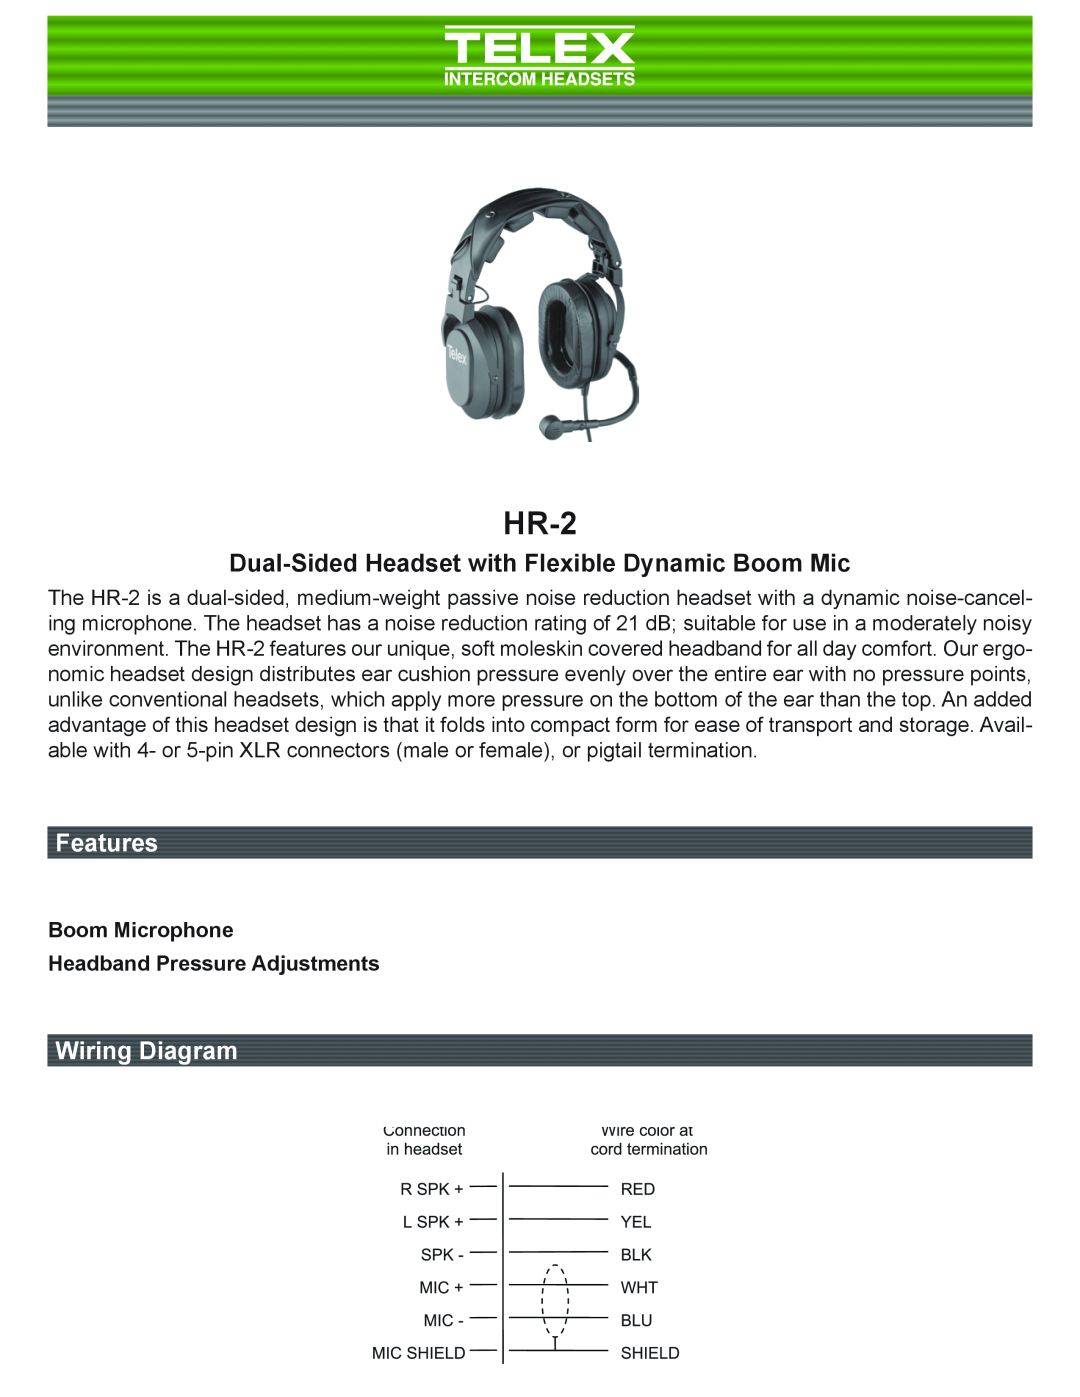 Telex HR-2PT, HR-2R5, HR-2A5 manual Dual-SidedHeadset with Flexible Dynamic Boom Mic, Features, Wiring Diagram 